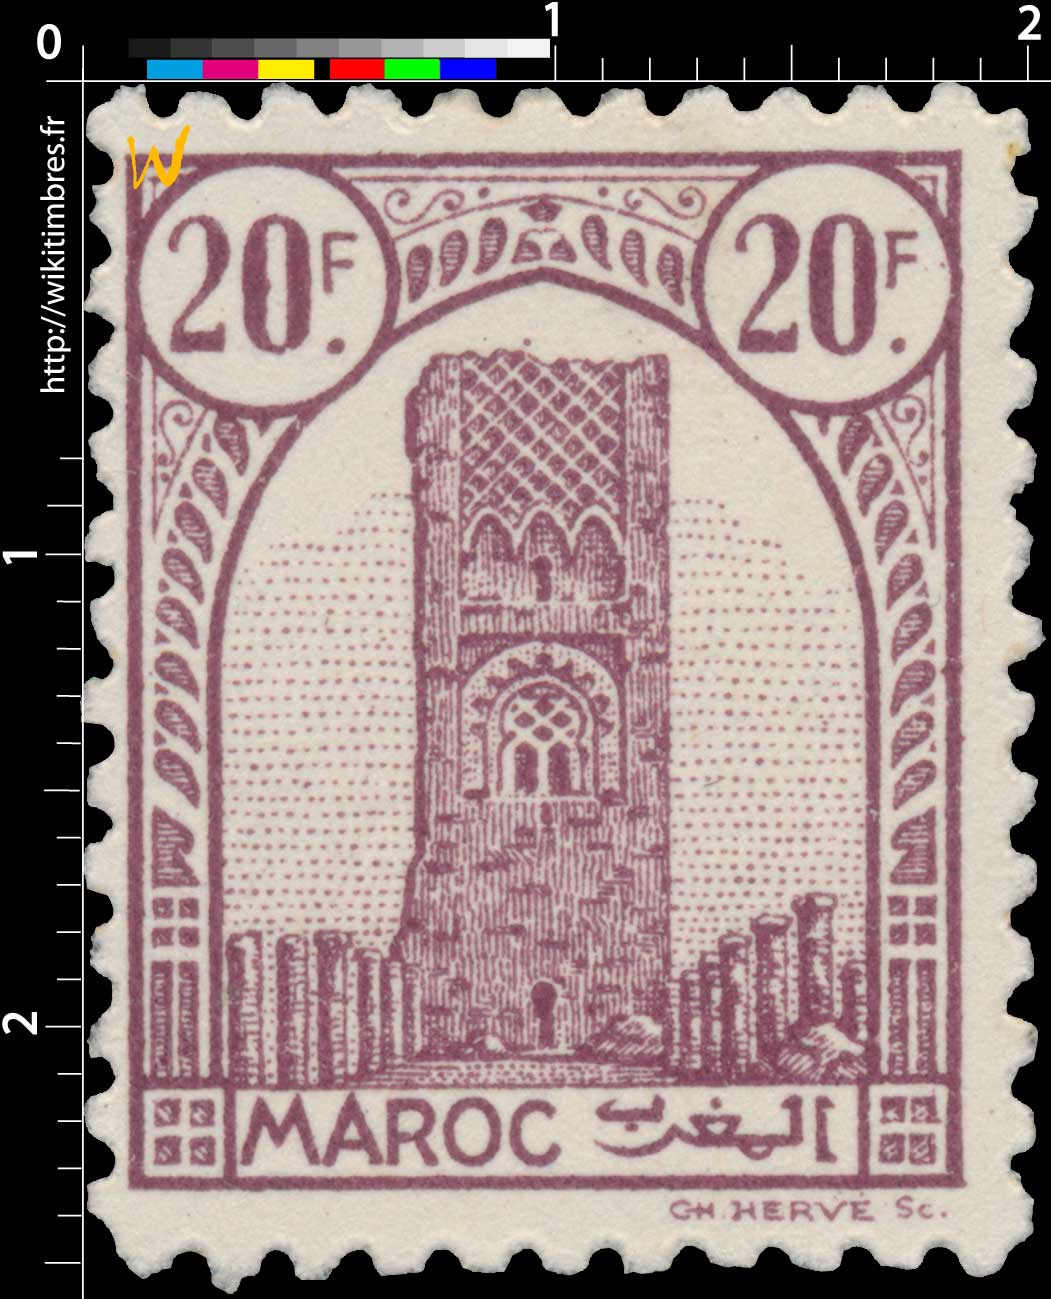 1943 Maroc - Tour Hassan - Rabat